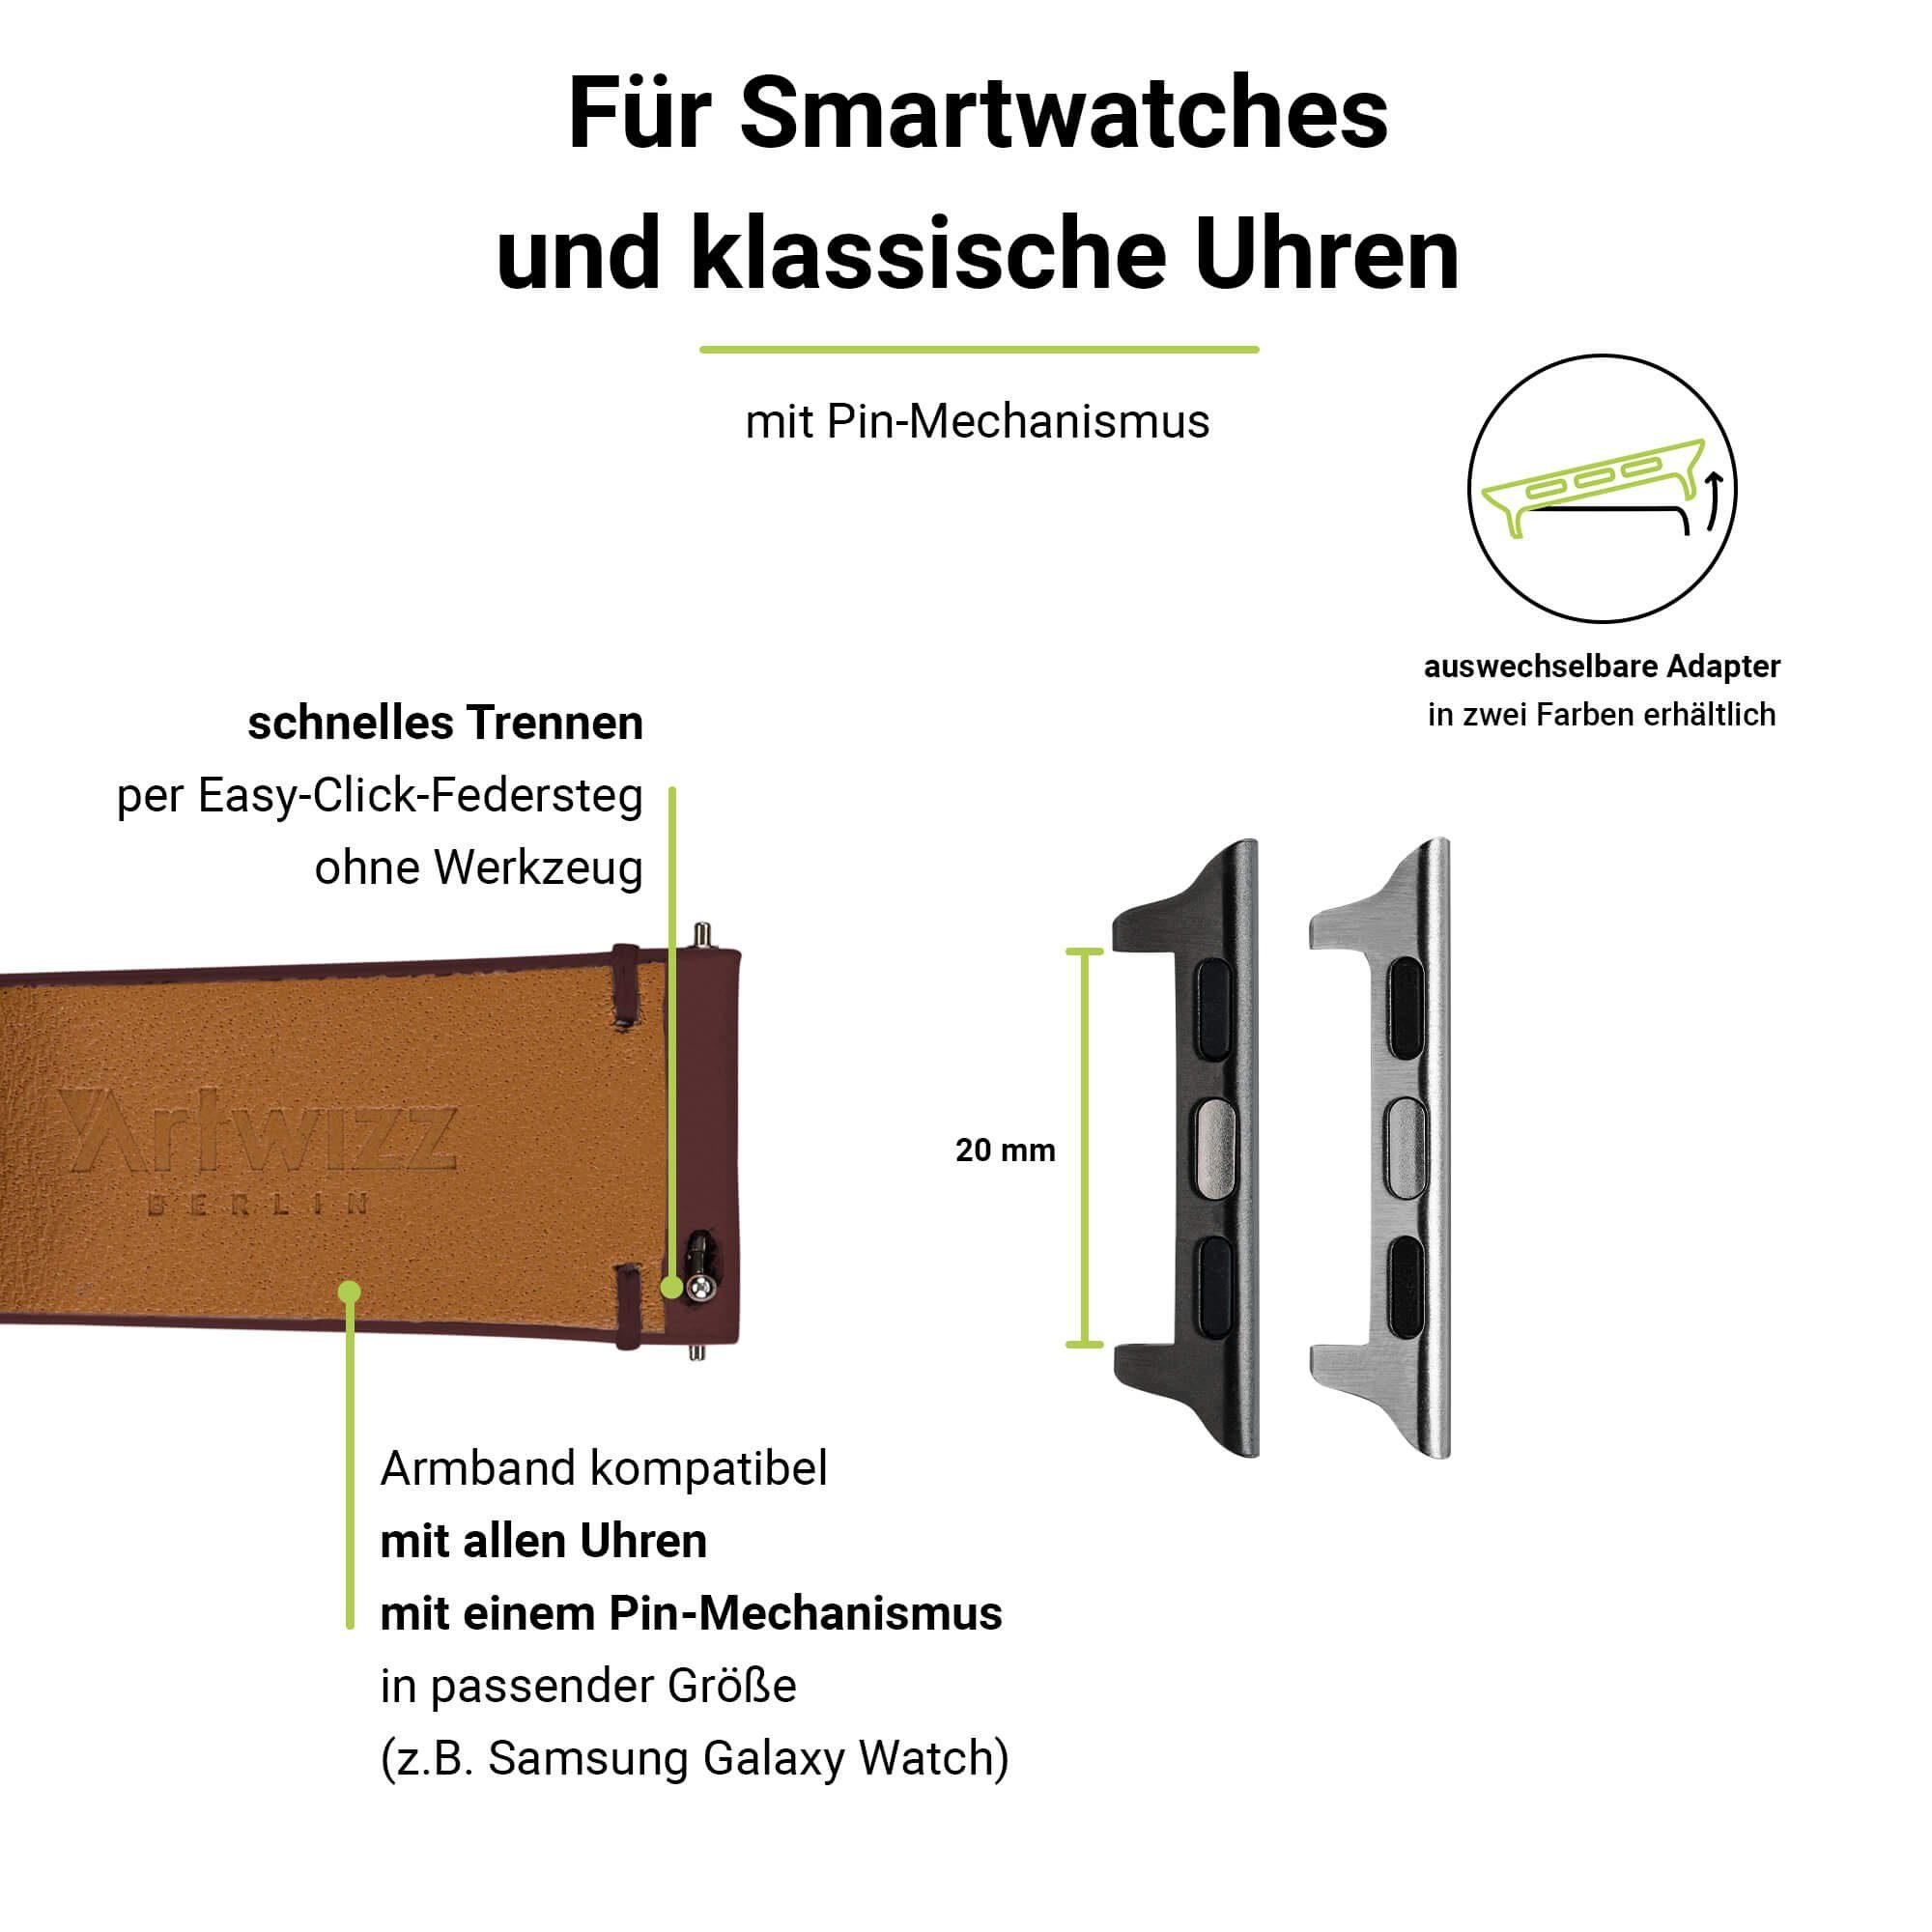 Leather, (41mm), Armband Artwizz 6-4 Adapter, 9-7 Watch 3-1 & mit SE Apple WatchBand Braun, (40mm), (38mm) Leder Series Smartwatch-Armband